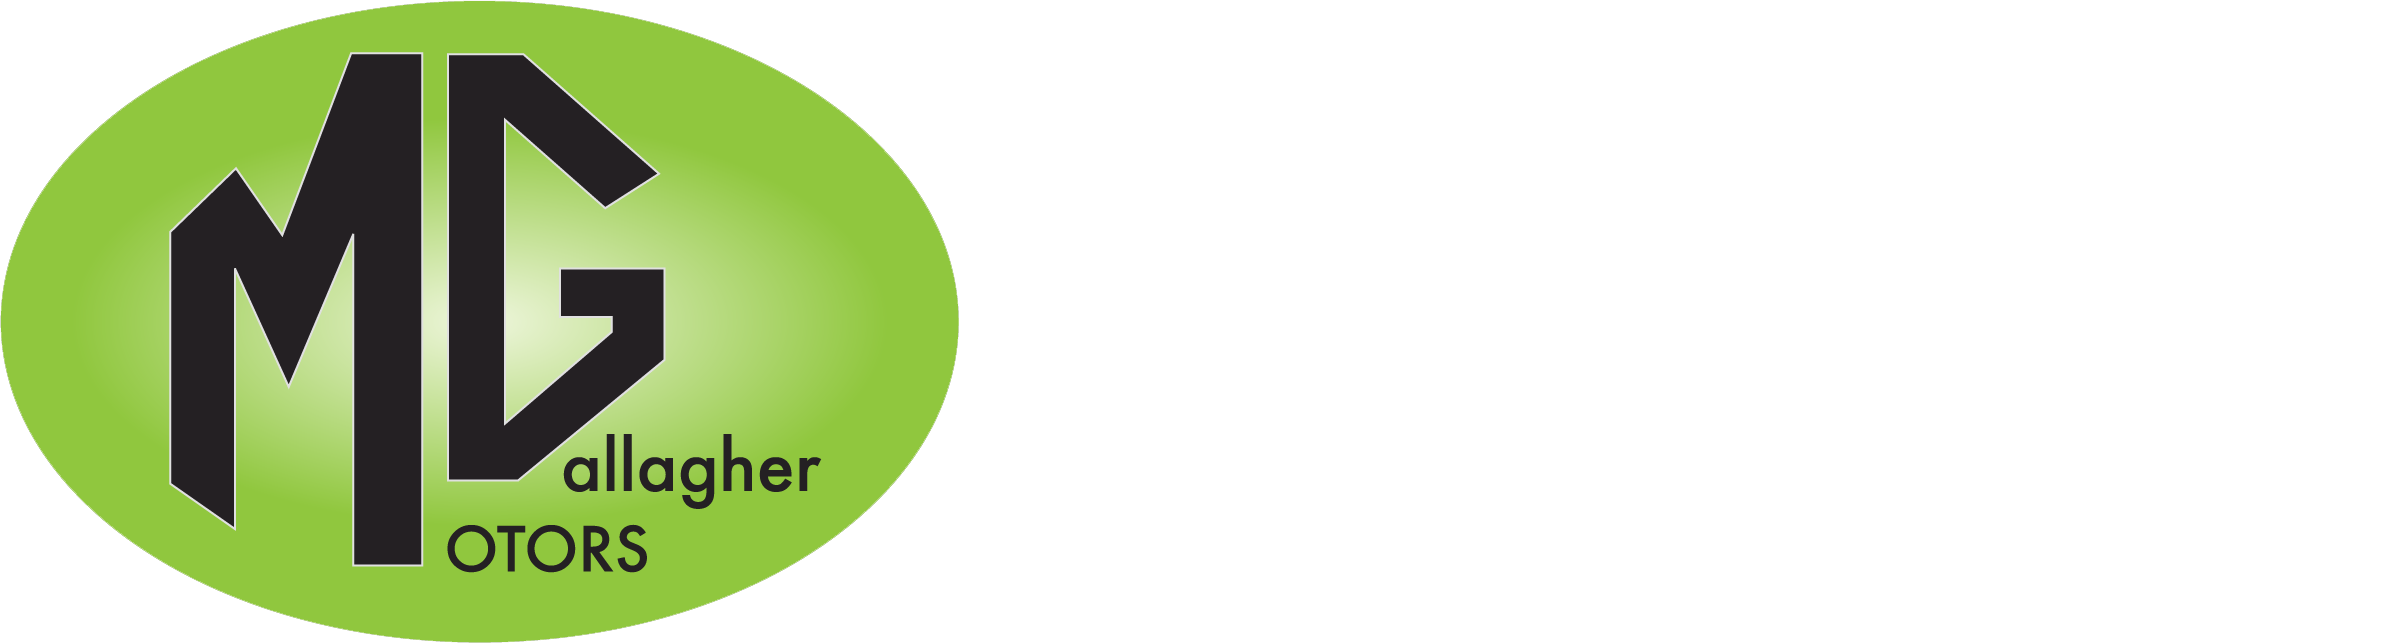 M Gallagher Motors